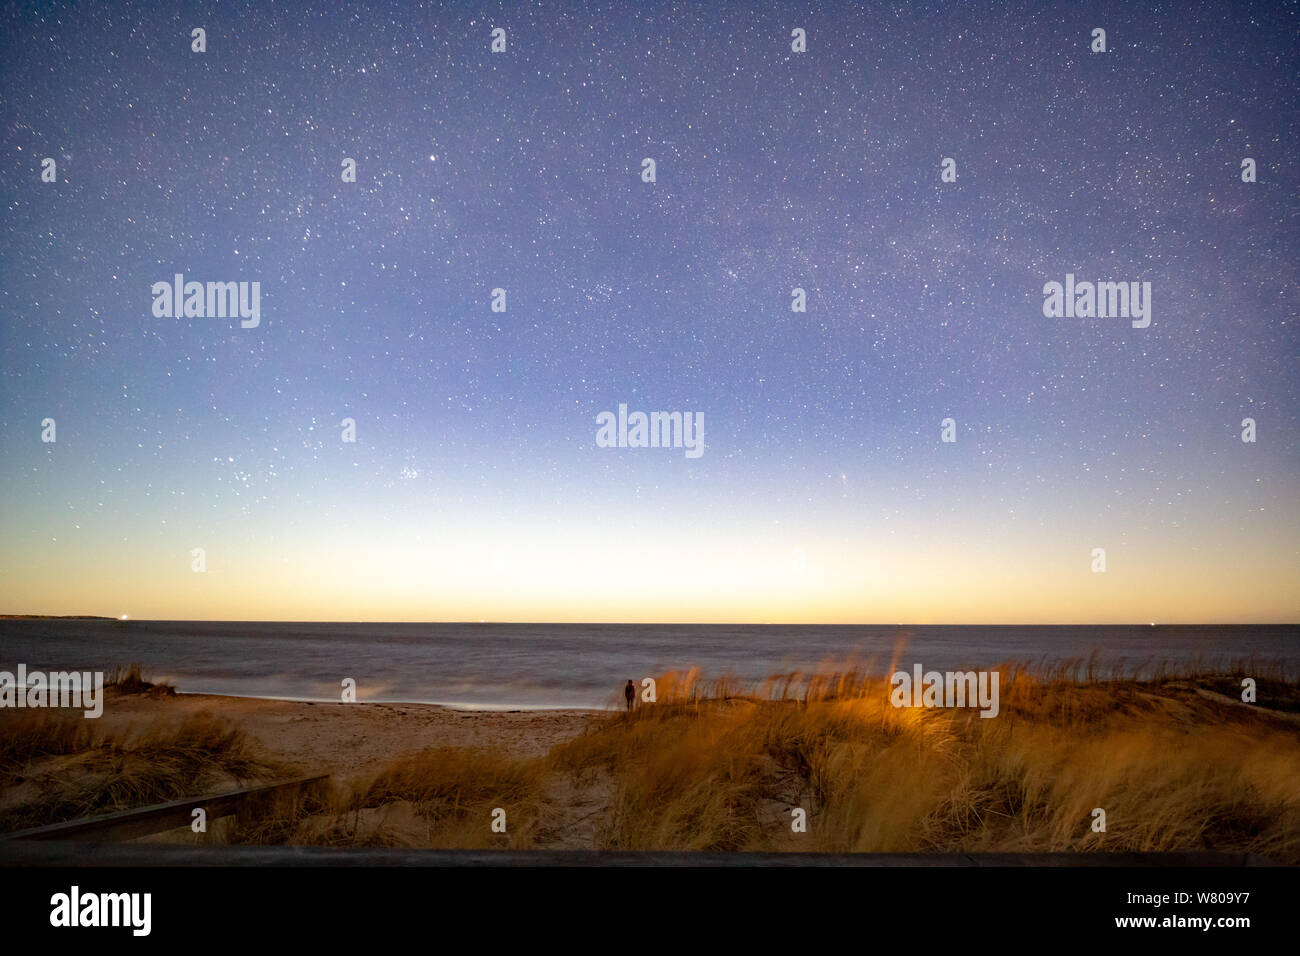 Milky way over sea at night at beach Stock Photo